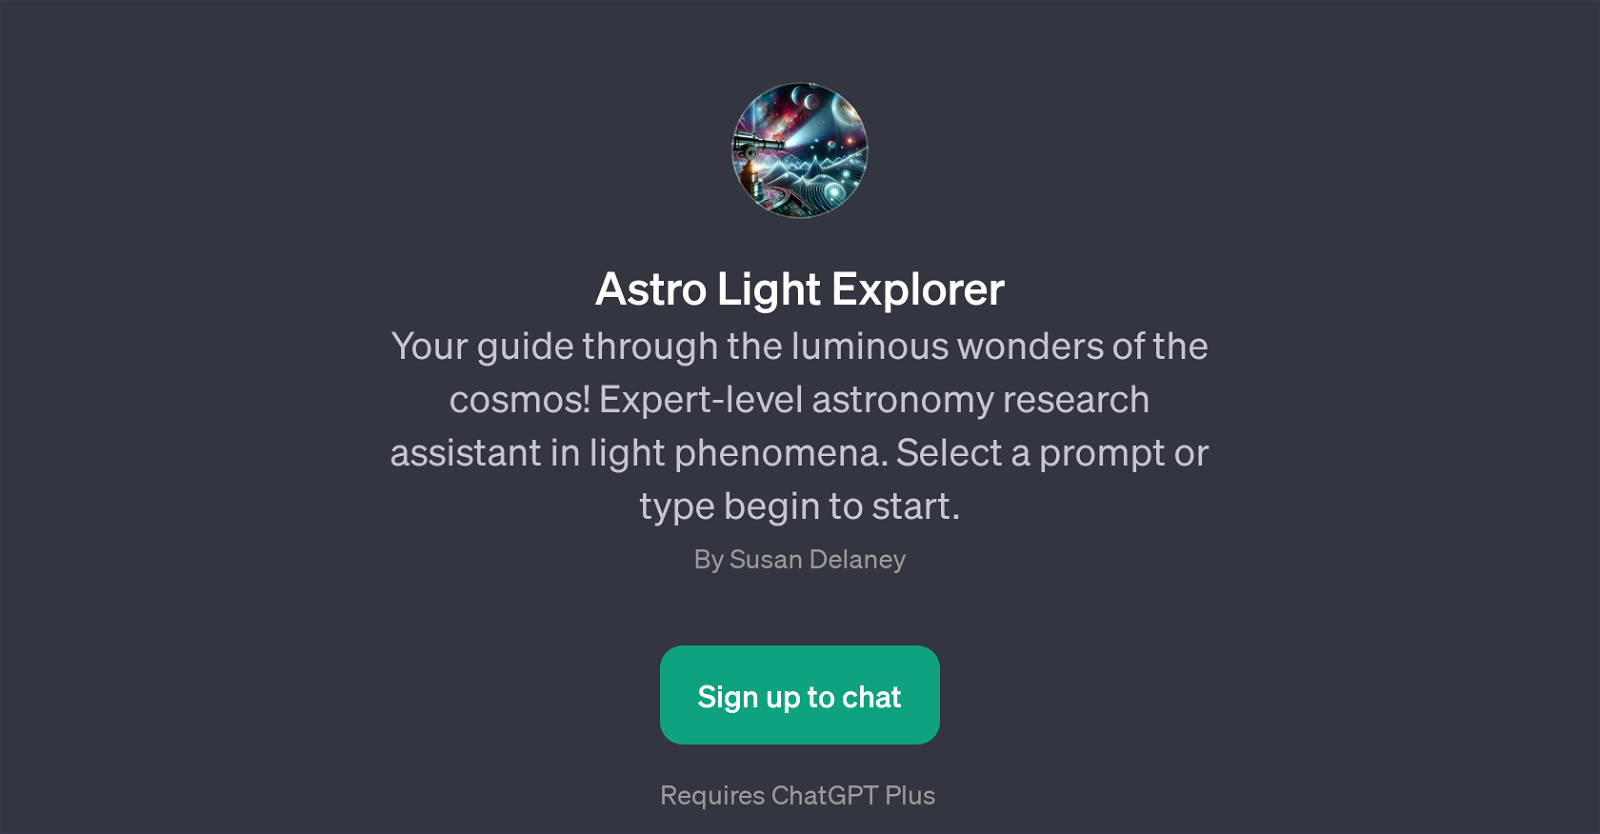 Astro Light Explorer website